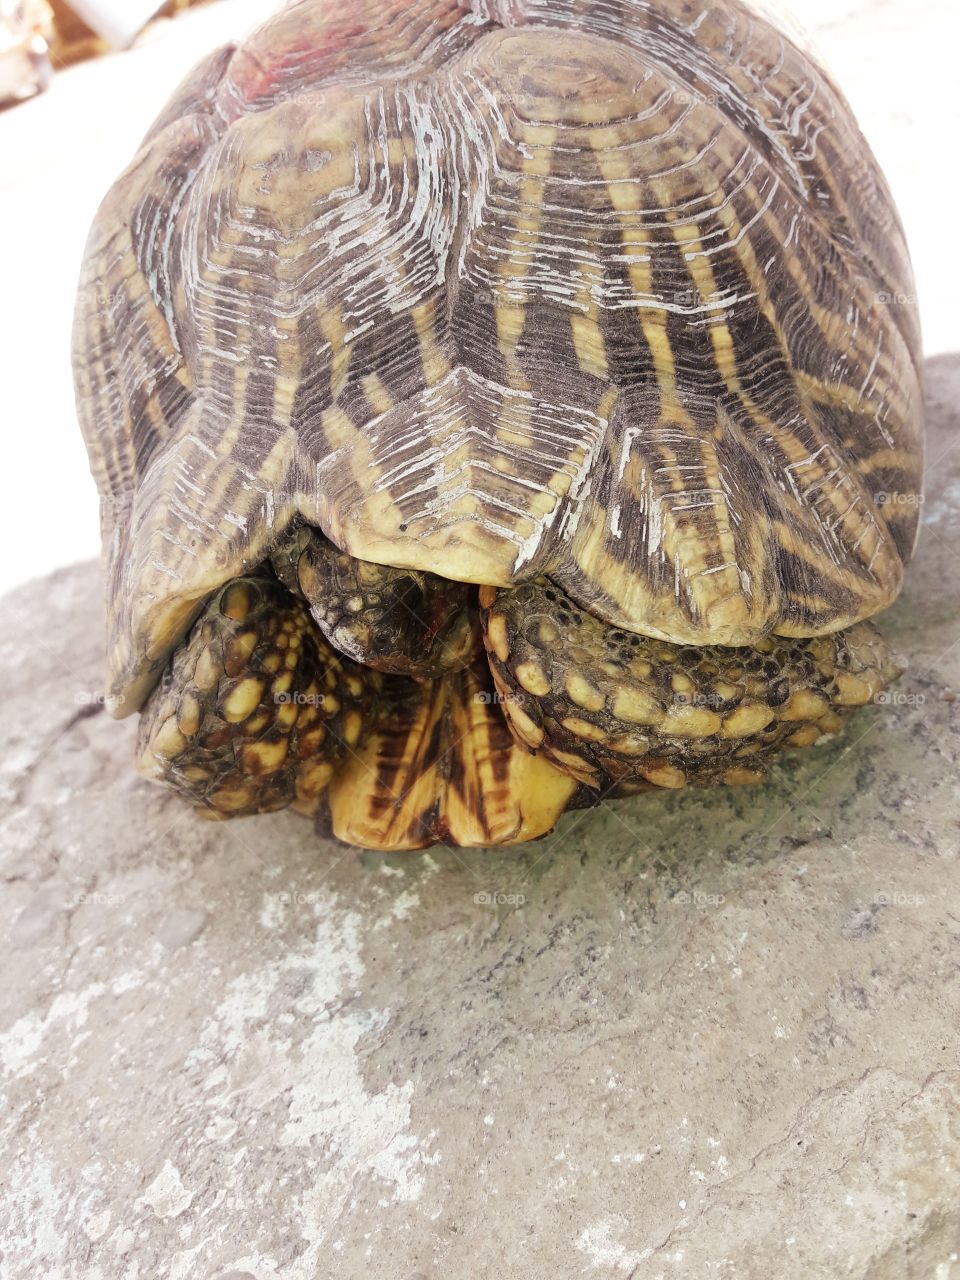 The wildlife lover has captured tortoise